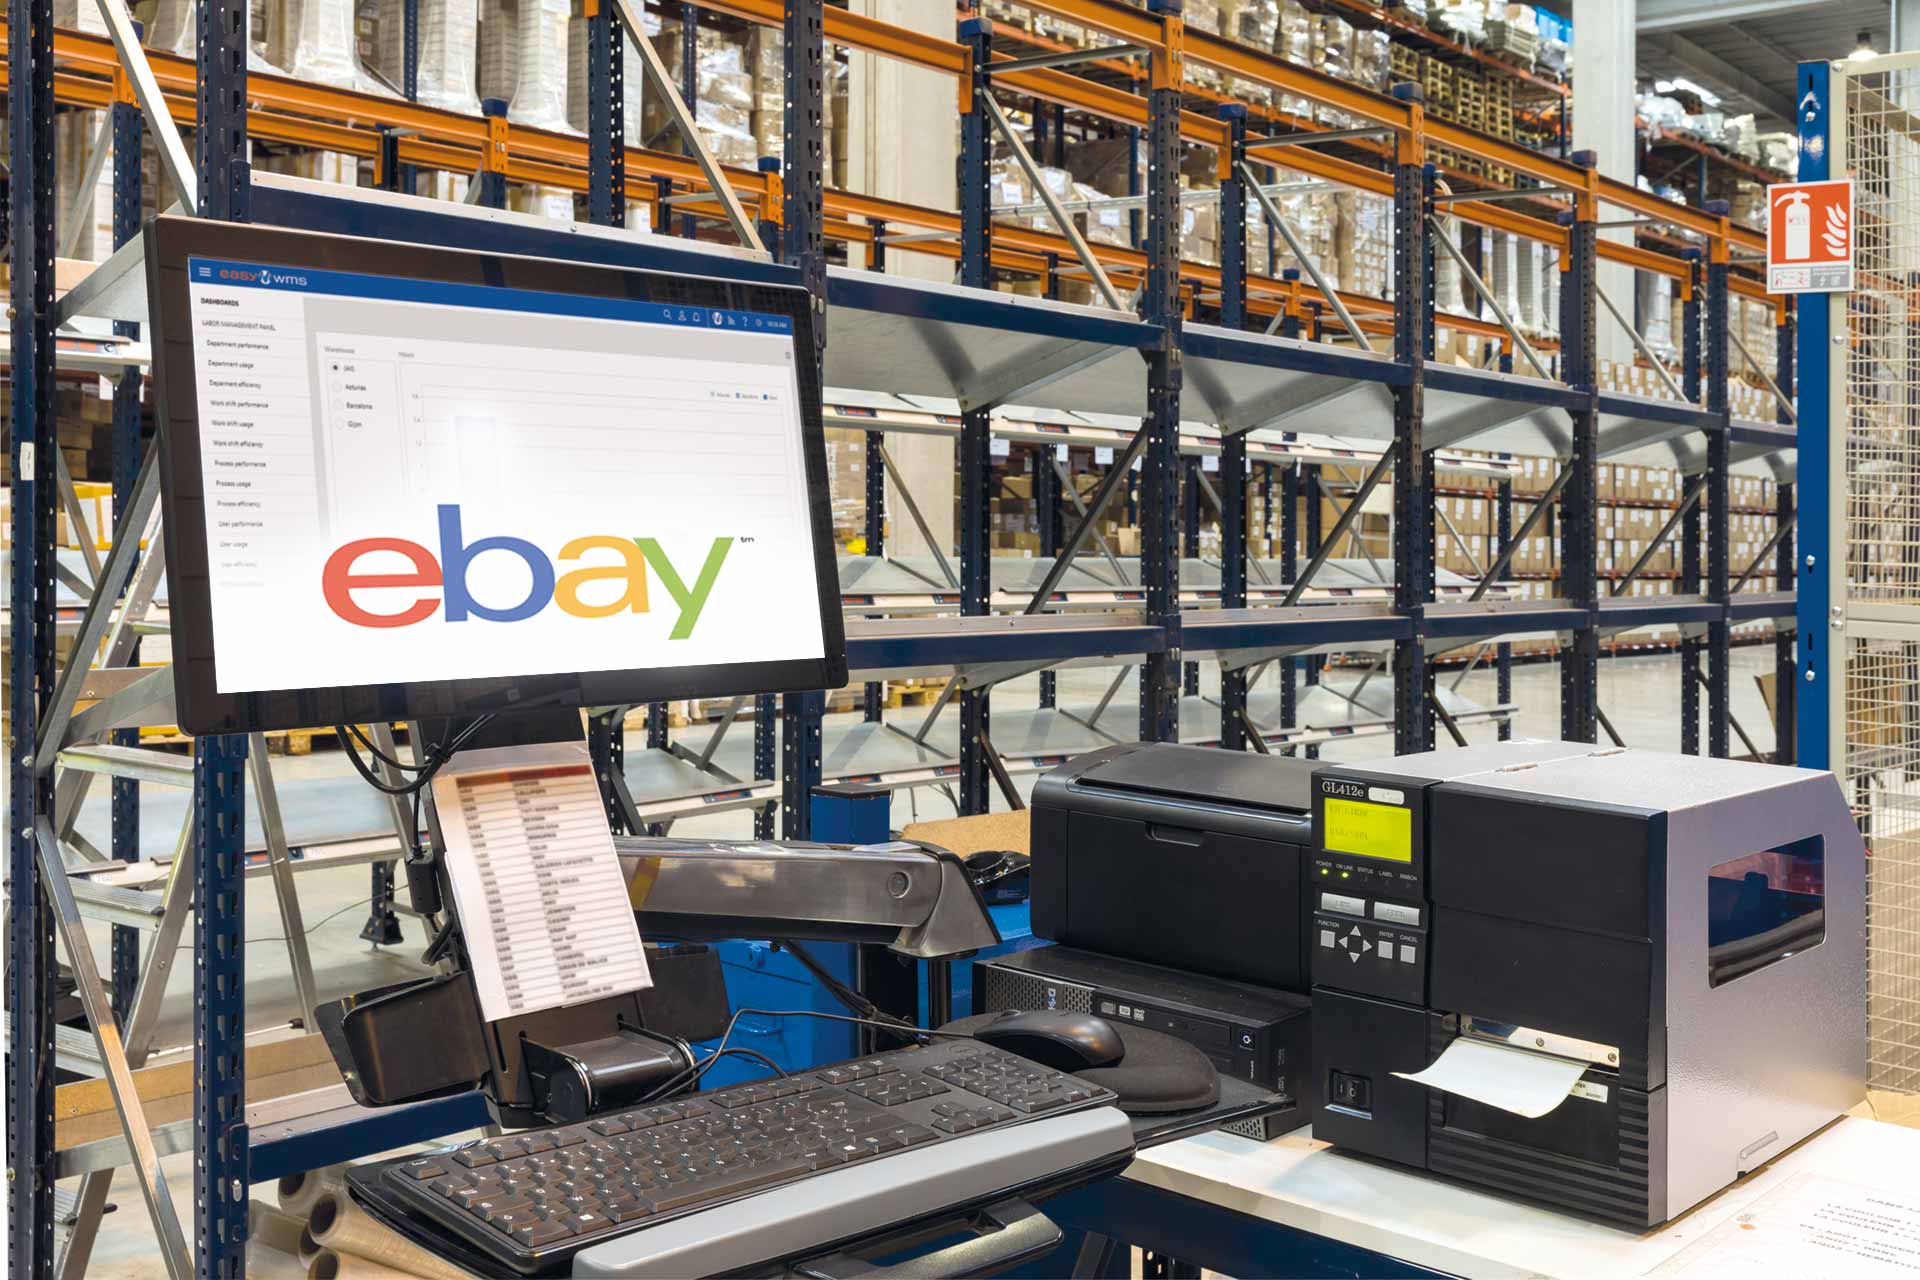 eBay sales software is key for ensuring efficienct logistics processes